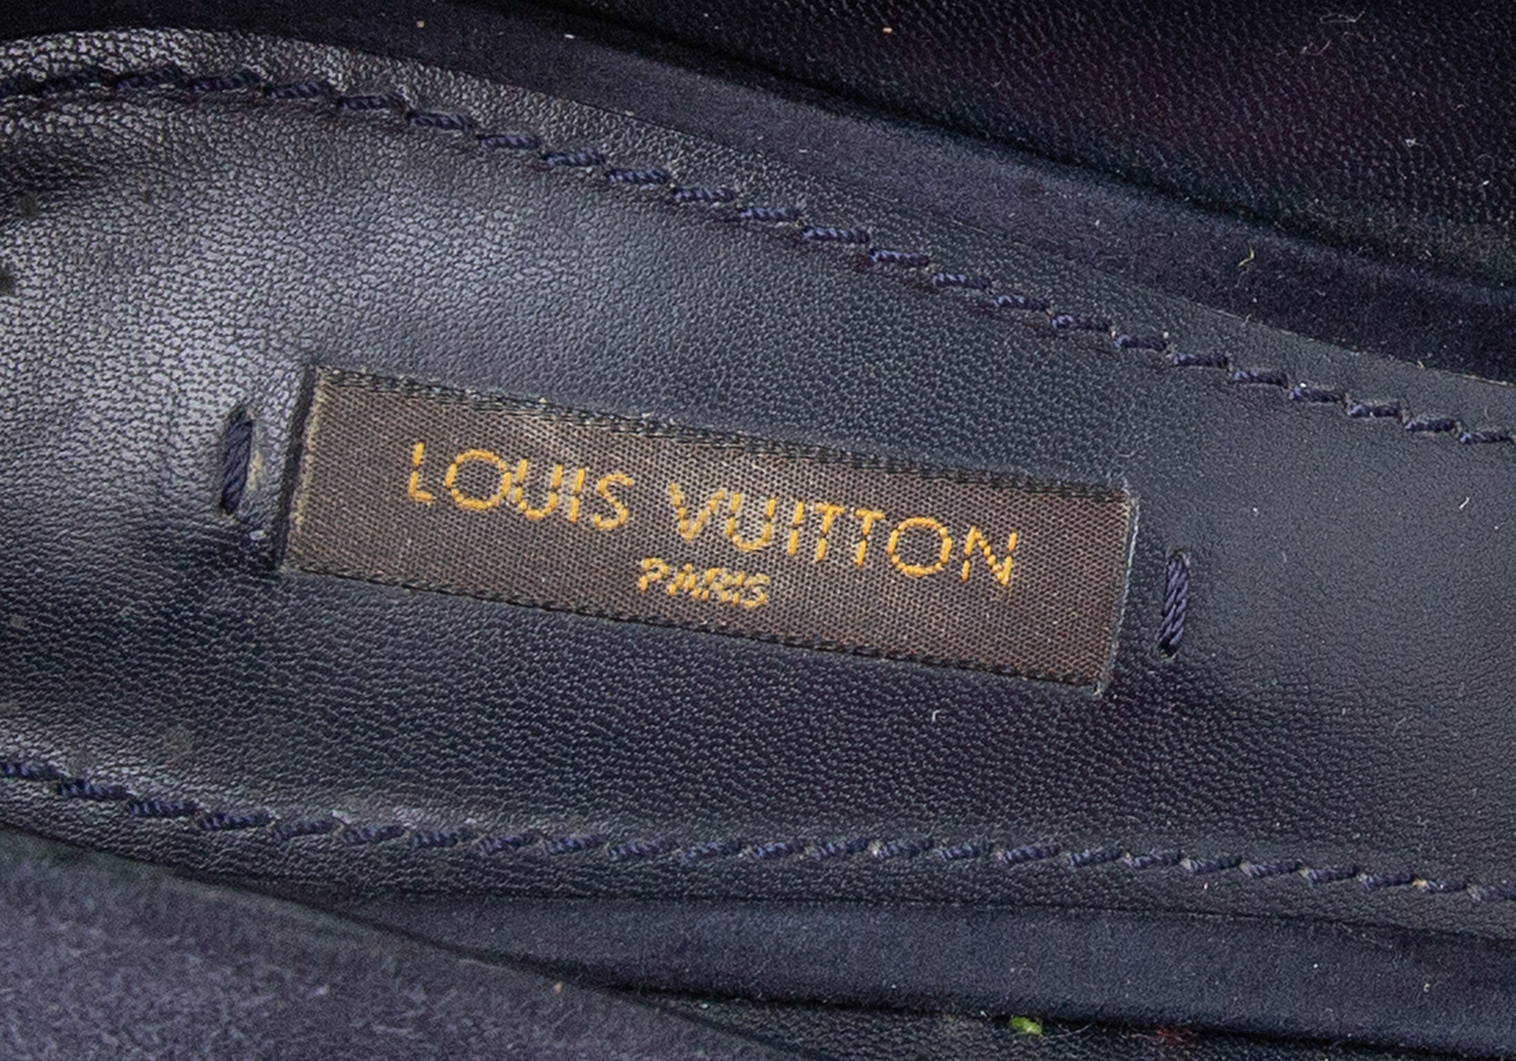 LOUIS VUITTON ルイヴィトン 赤 パンプス 靴 38.5号 - ハイヒール/パンプス